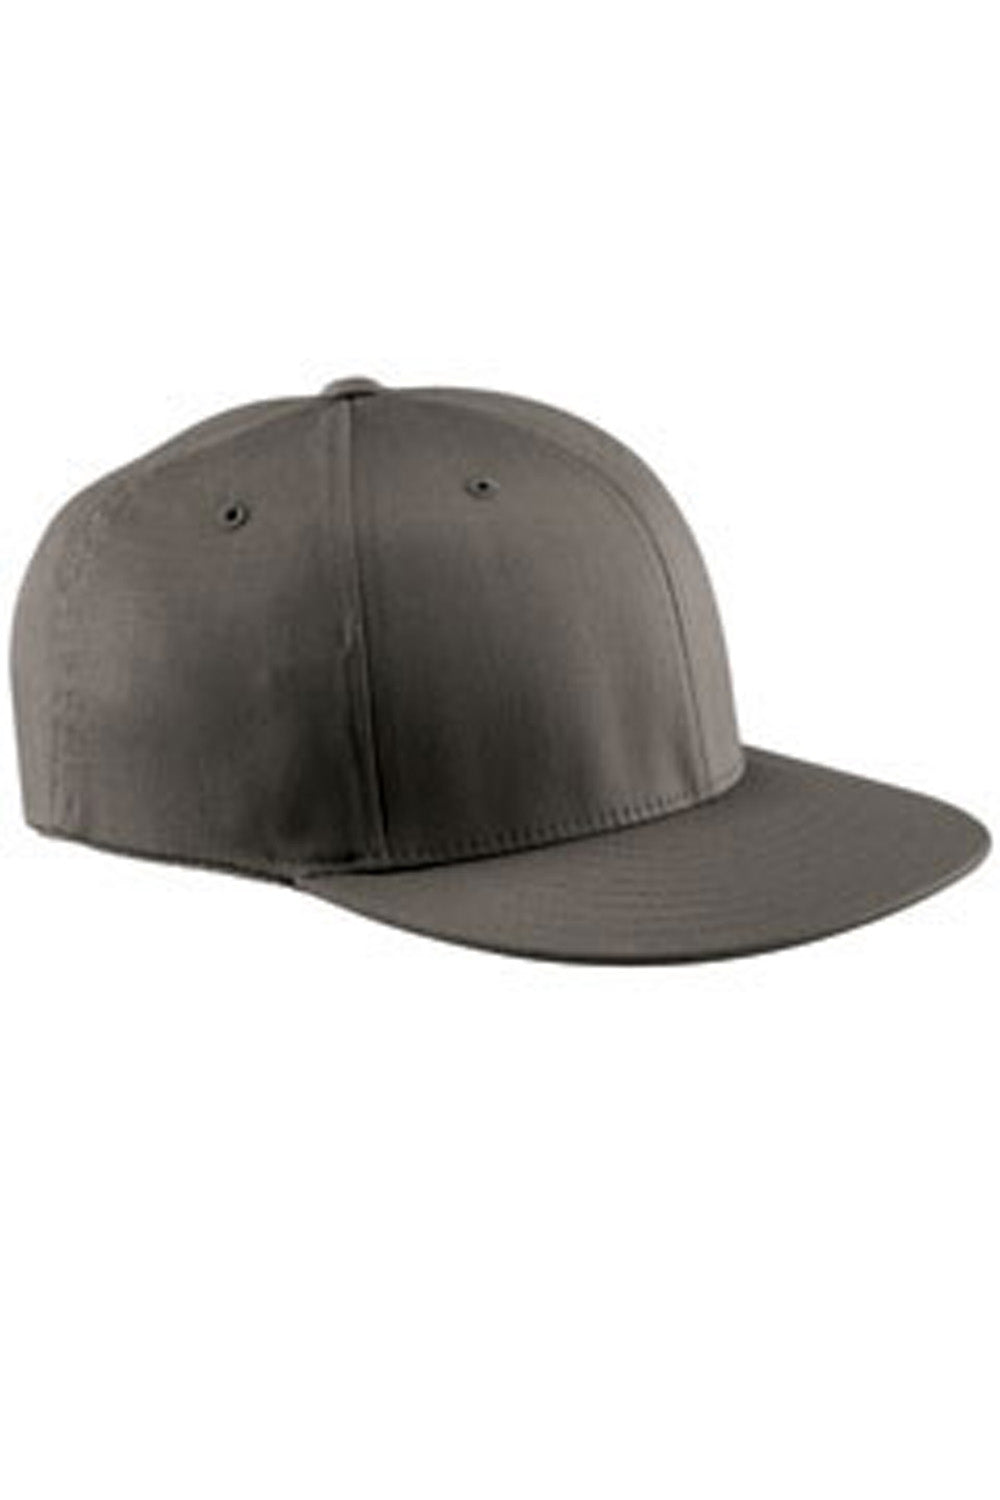 Flexfit 6297F Mens Stretch Fit Hat Dark Grey Front